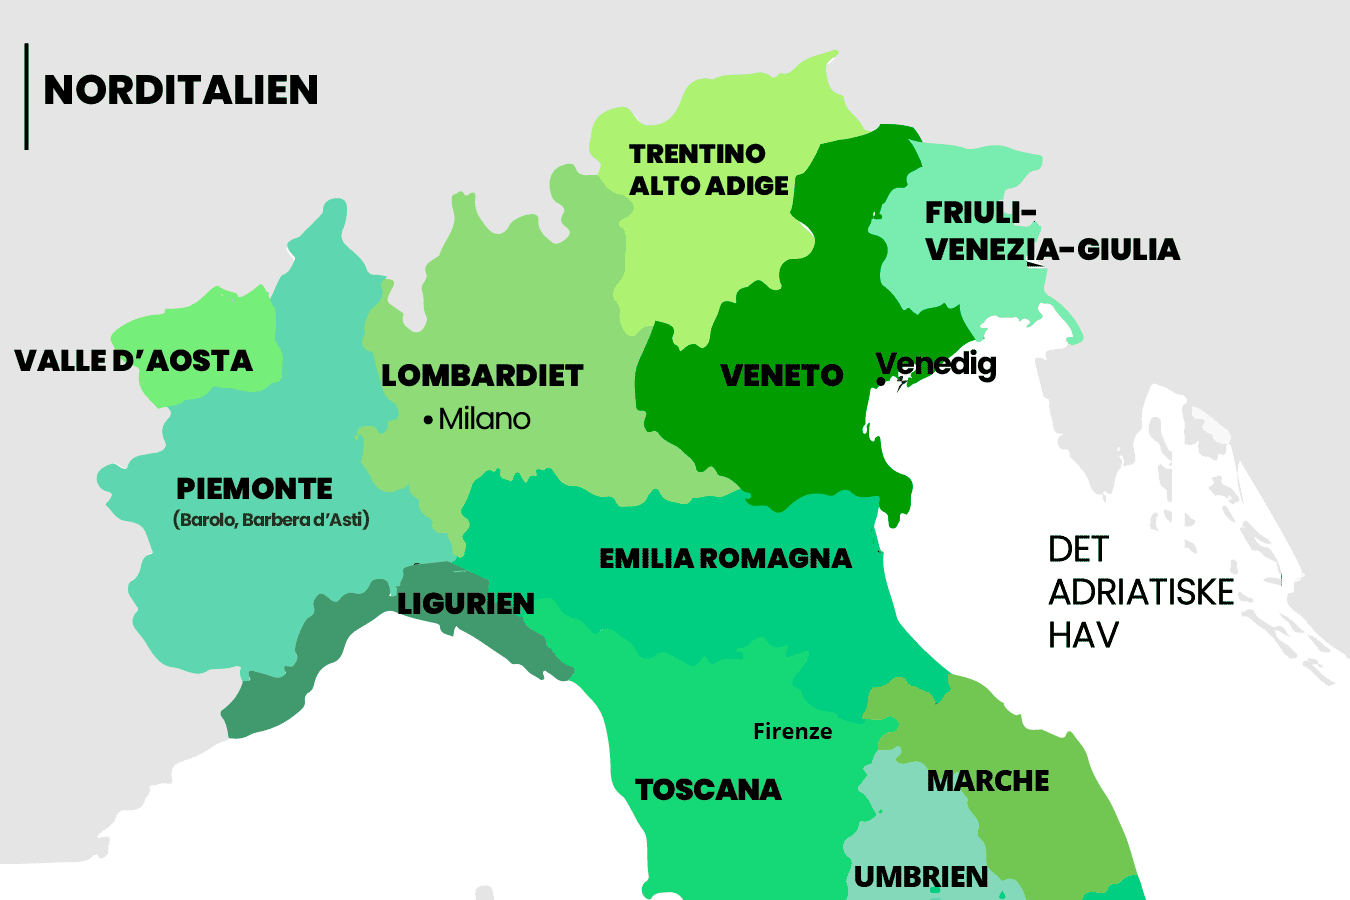 Kort over Nordlitalien og dets vine